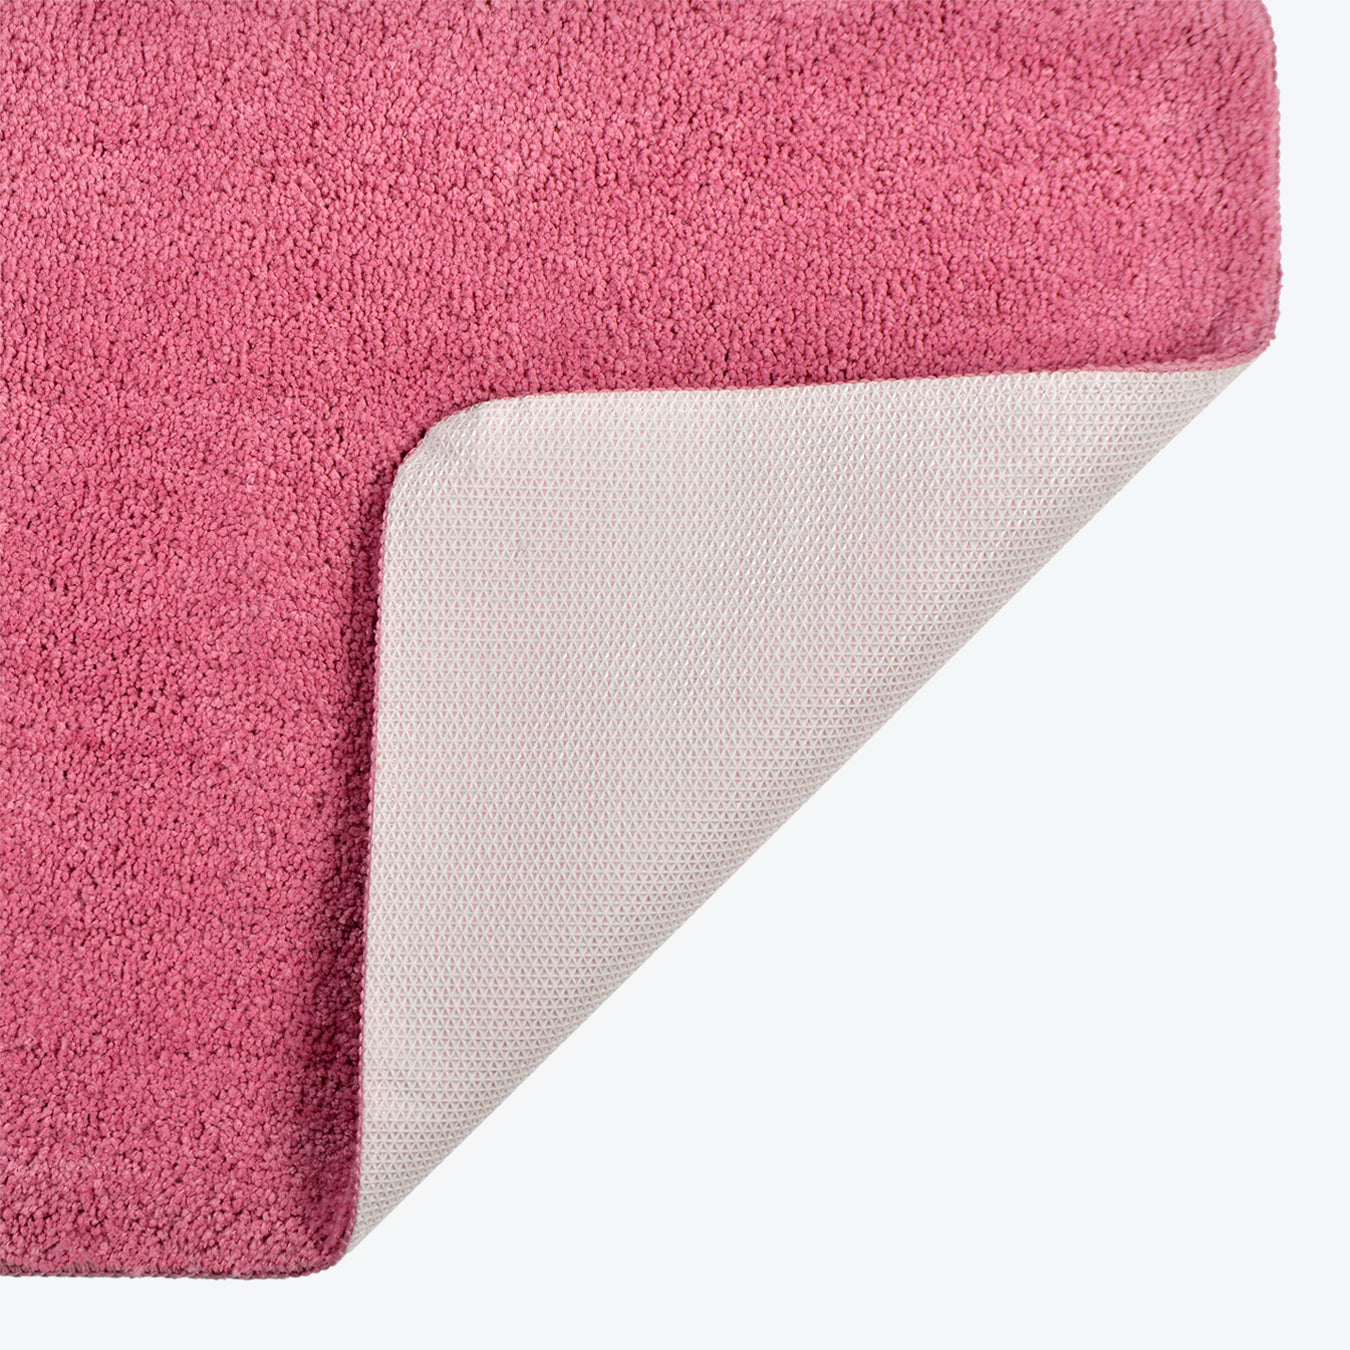 Rose Pink Microfibre Bath Mat - Non-slip Bathroom Rug